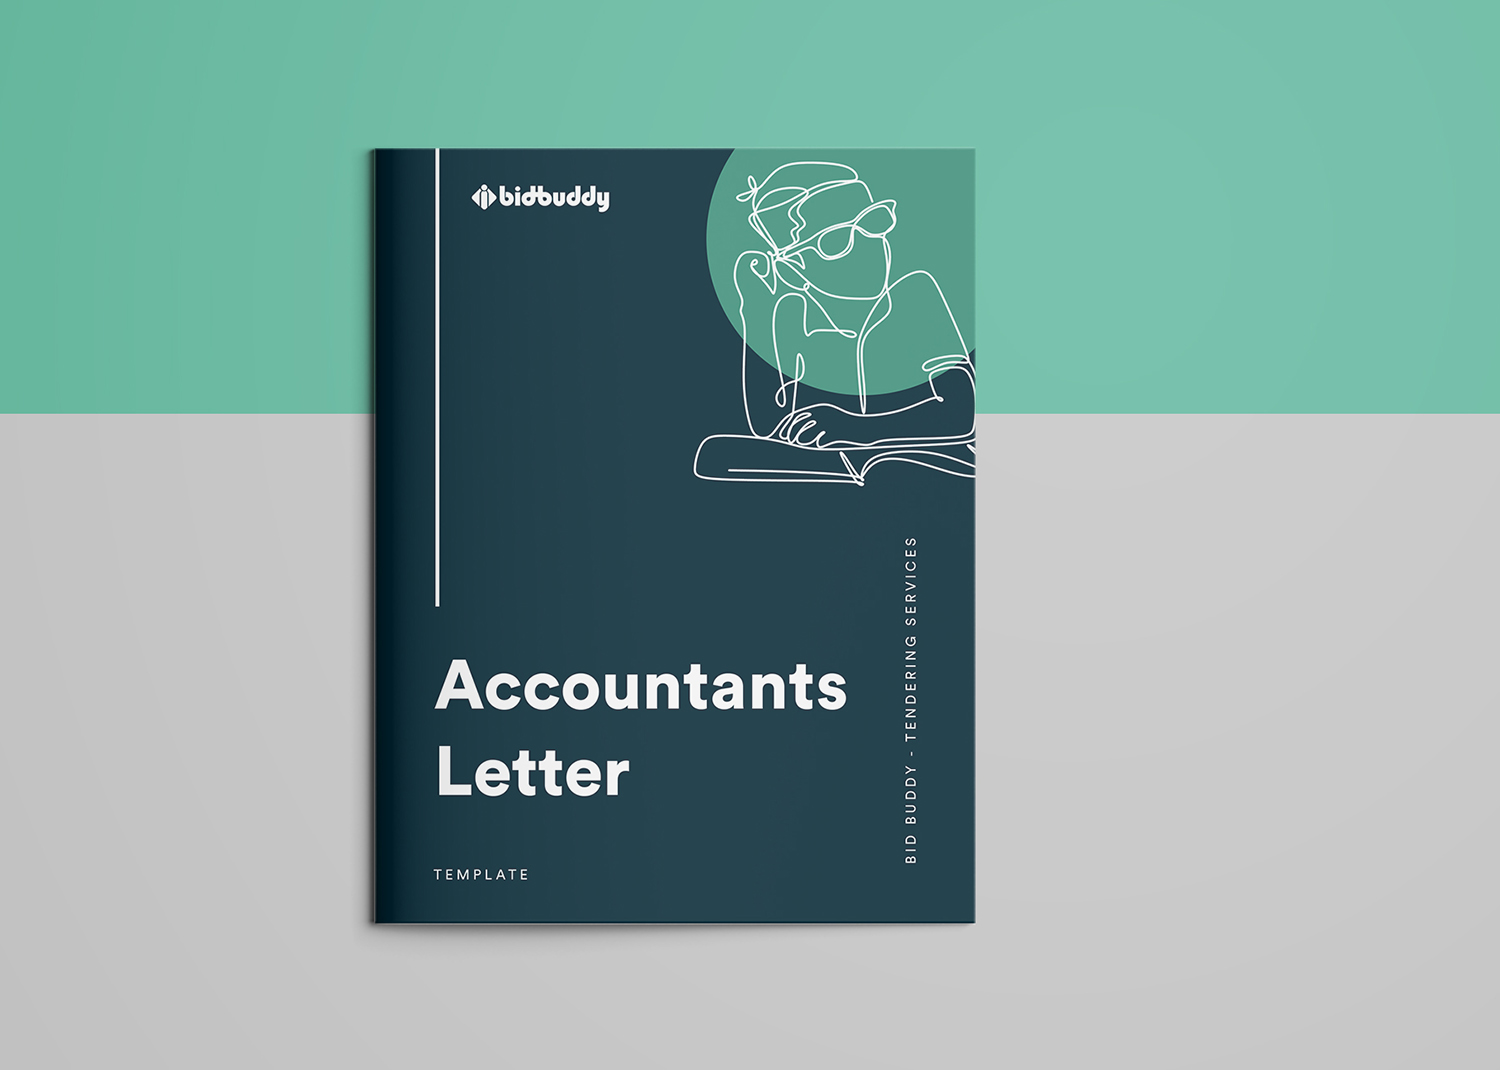 Accountants Letter